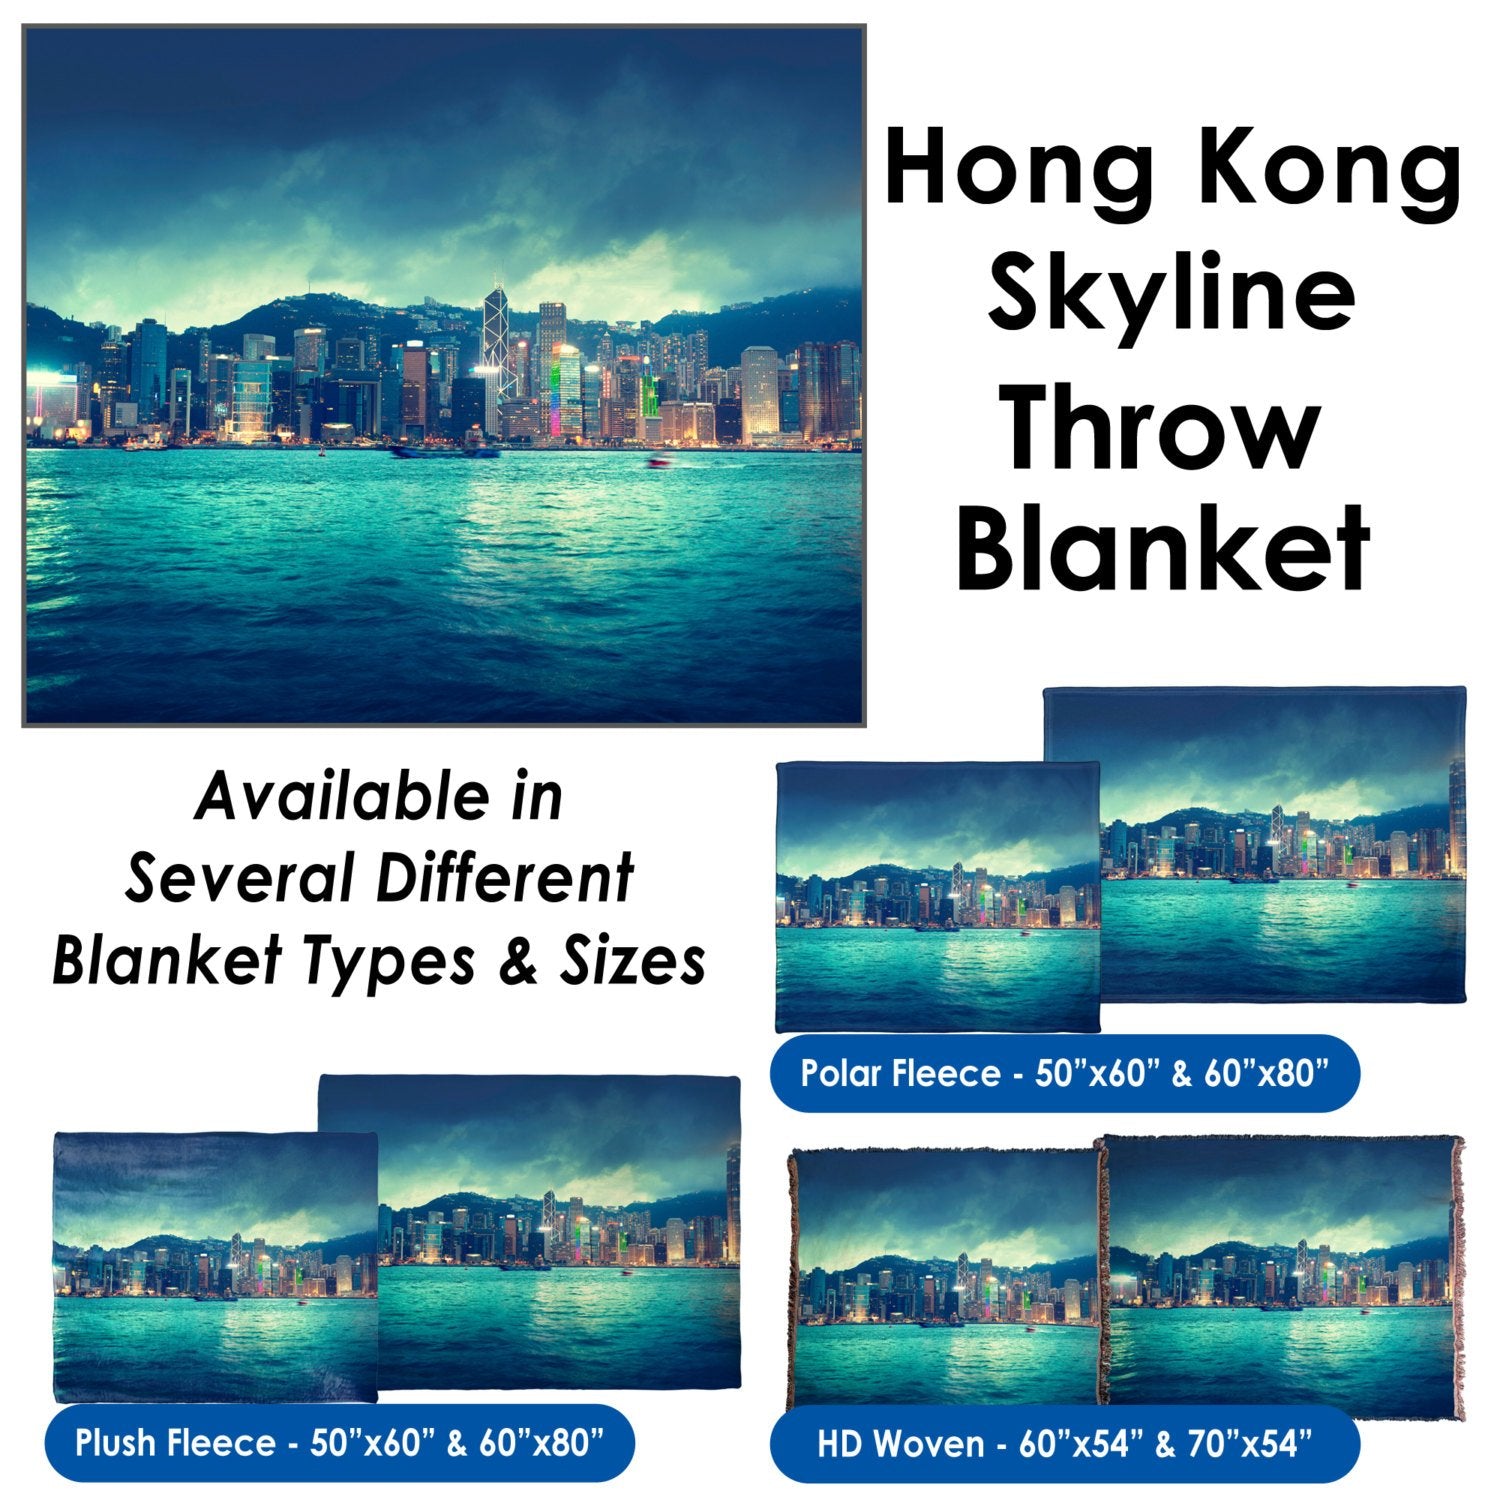 Hong Kong Skyline - Throw Blanket / Tapestry Wall Hanging